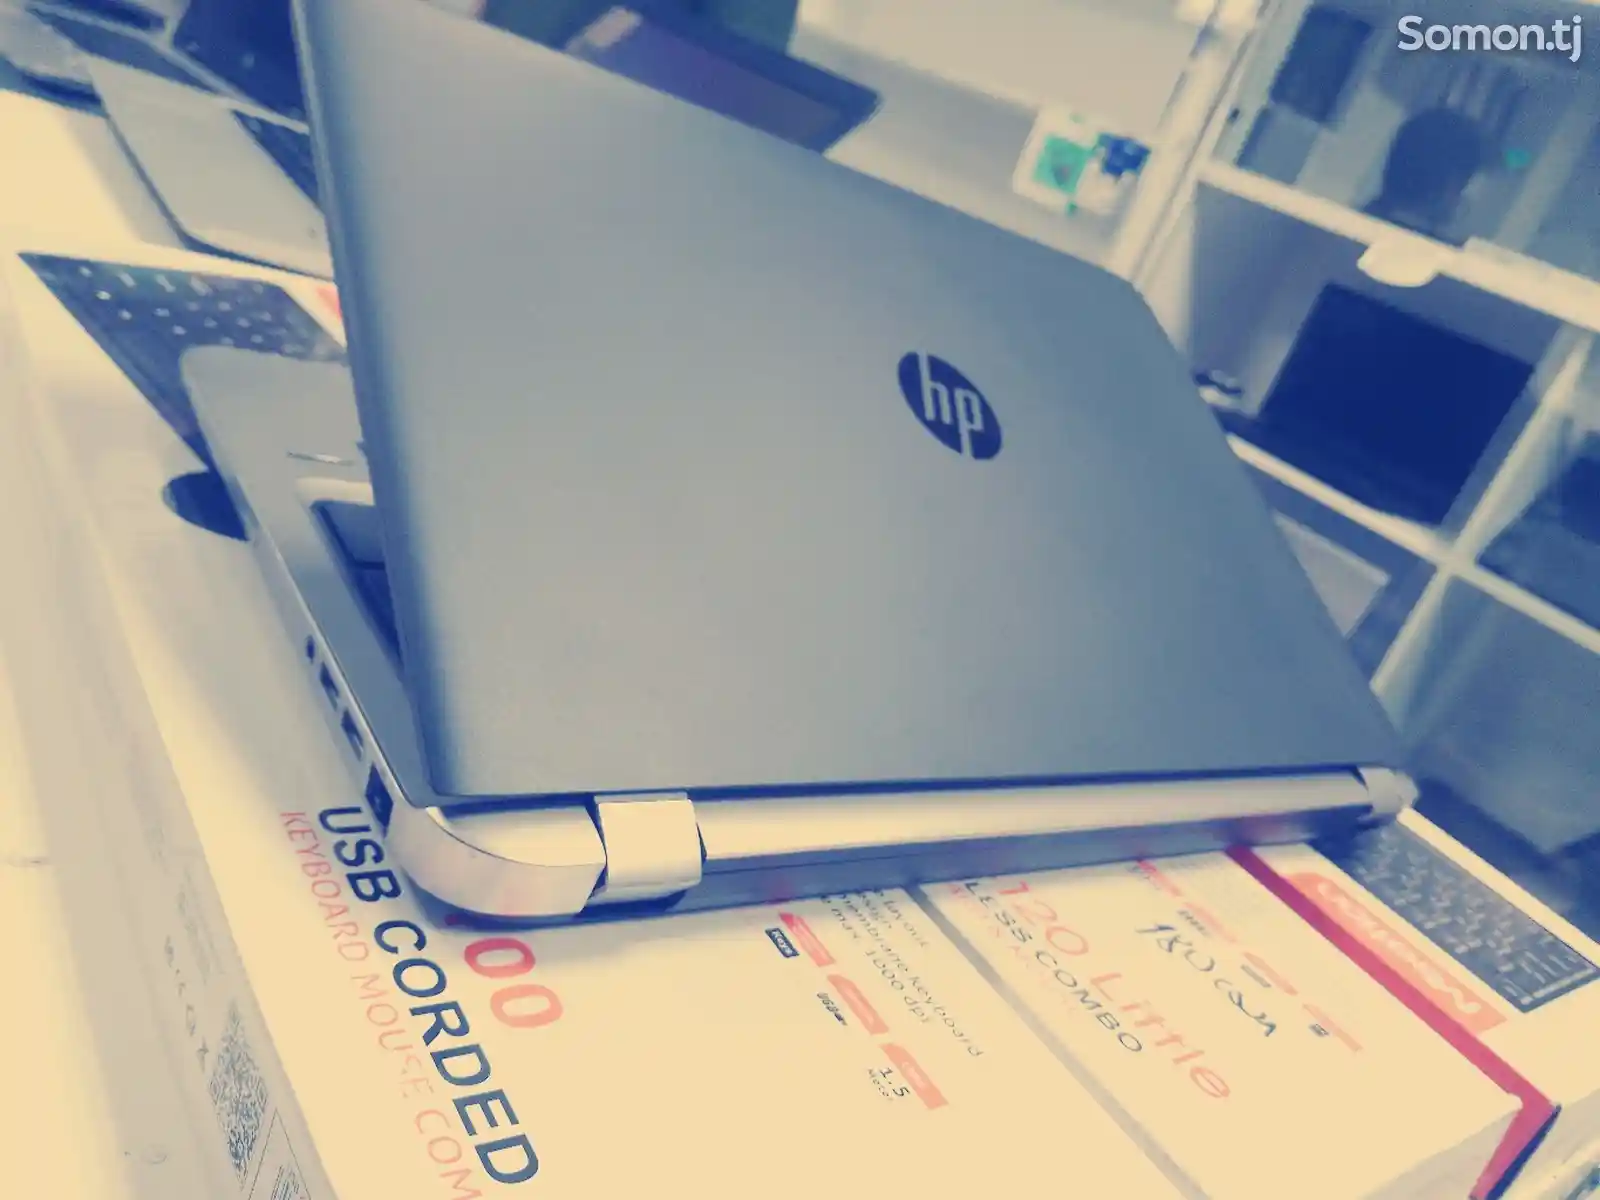 Ноутбук HP Probook g450 g3 Core i5 6TH 2.40GHz DDR4 8gb-4